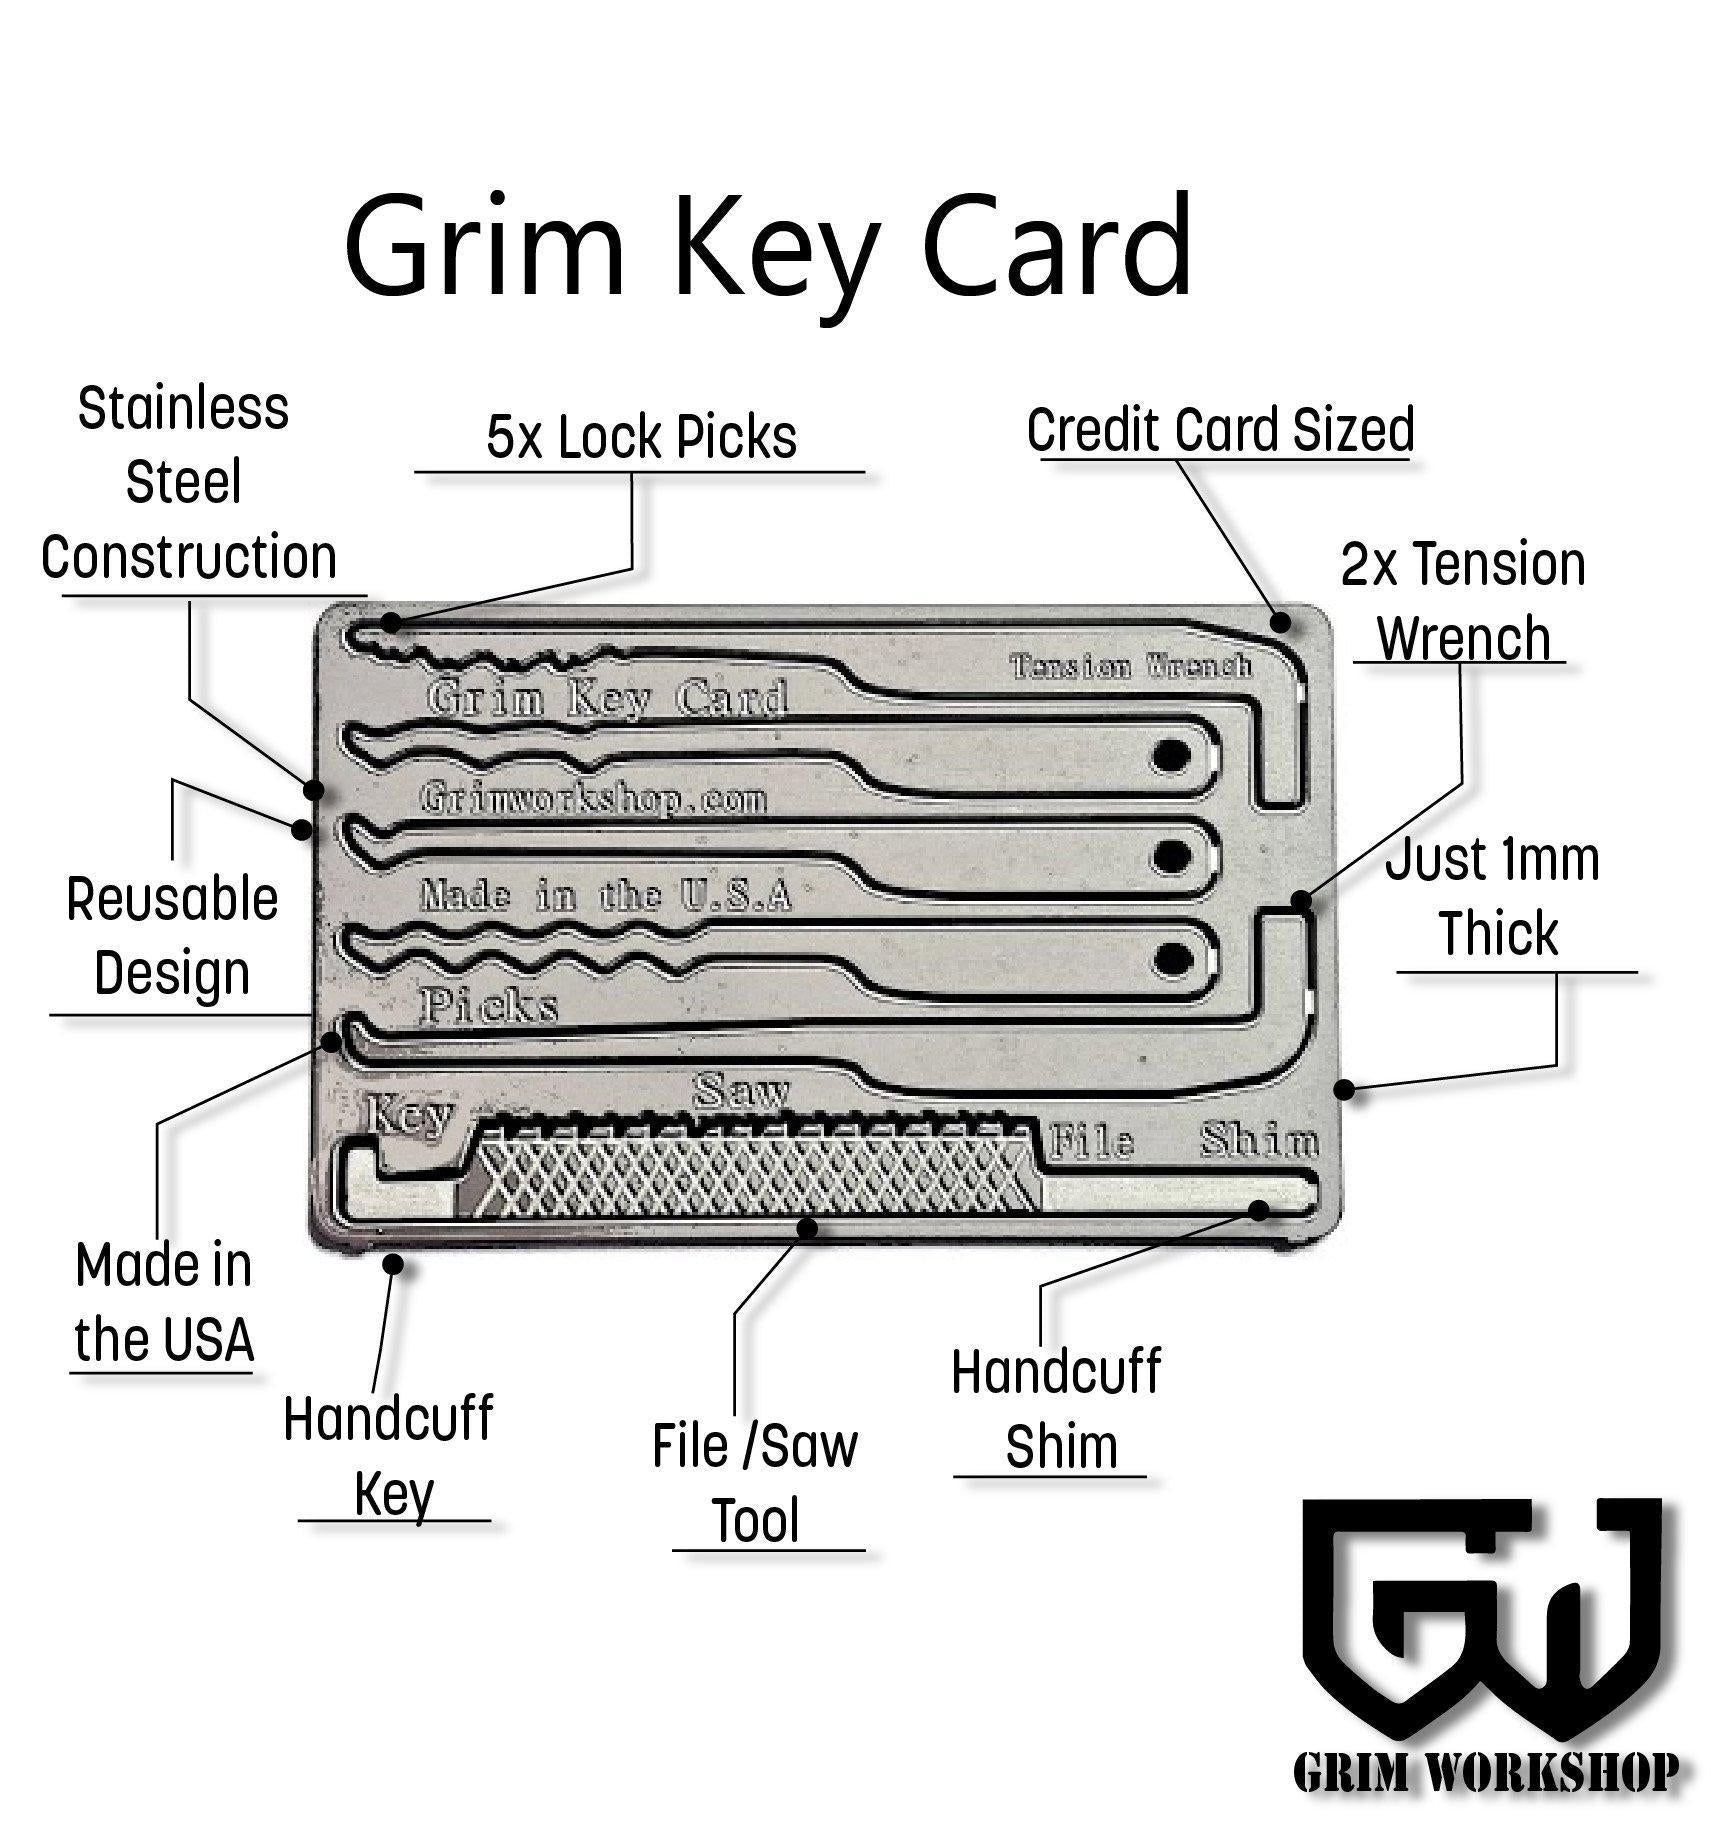 Grim Key Card : Credit Card Lock Pick Set and Escape Kit